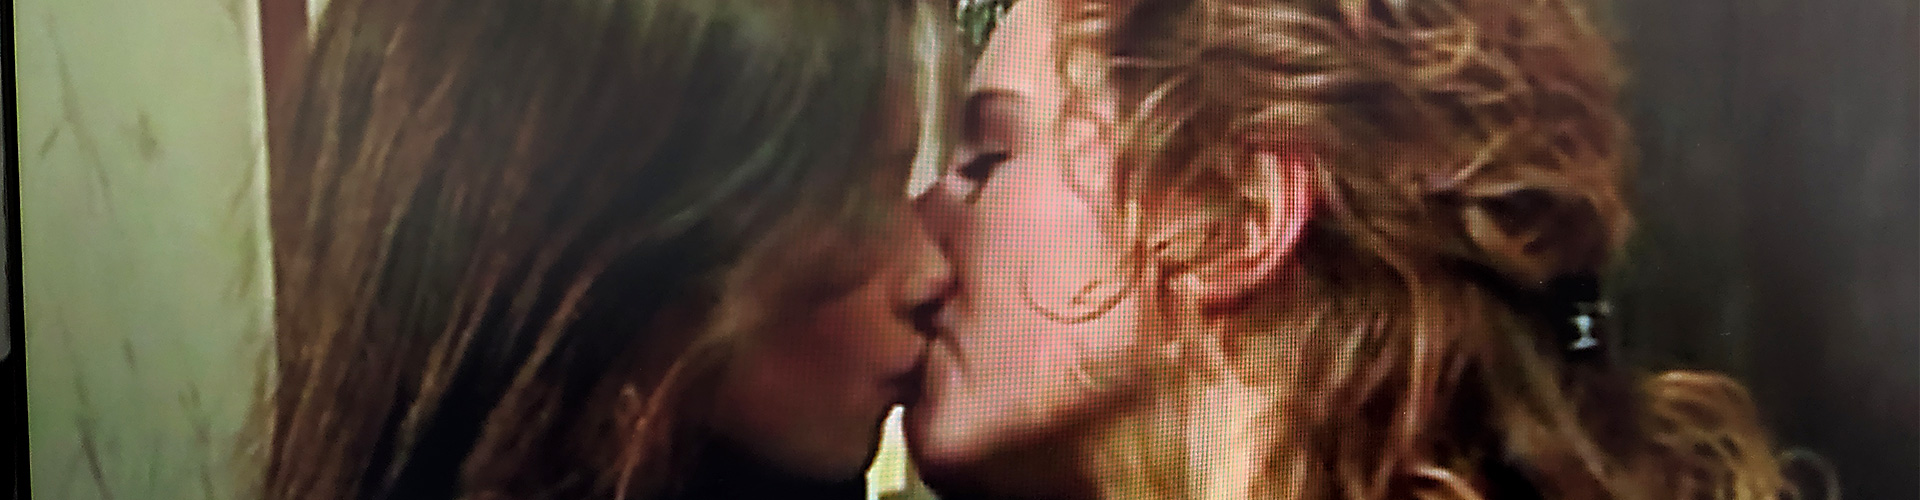 Two women kiss on Brookside